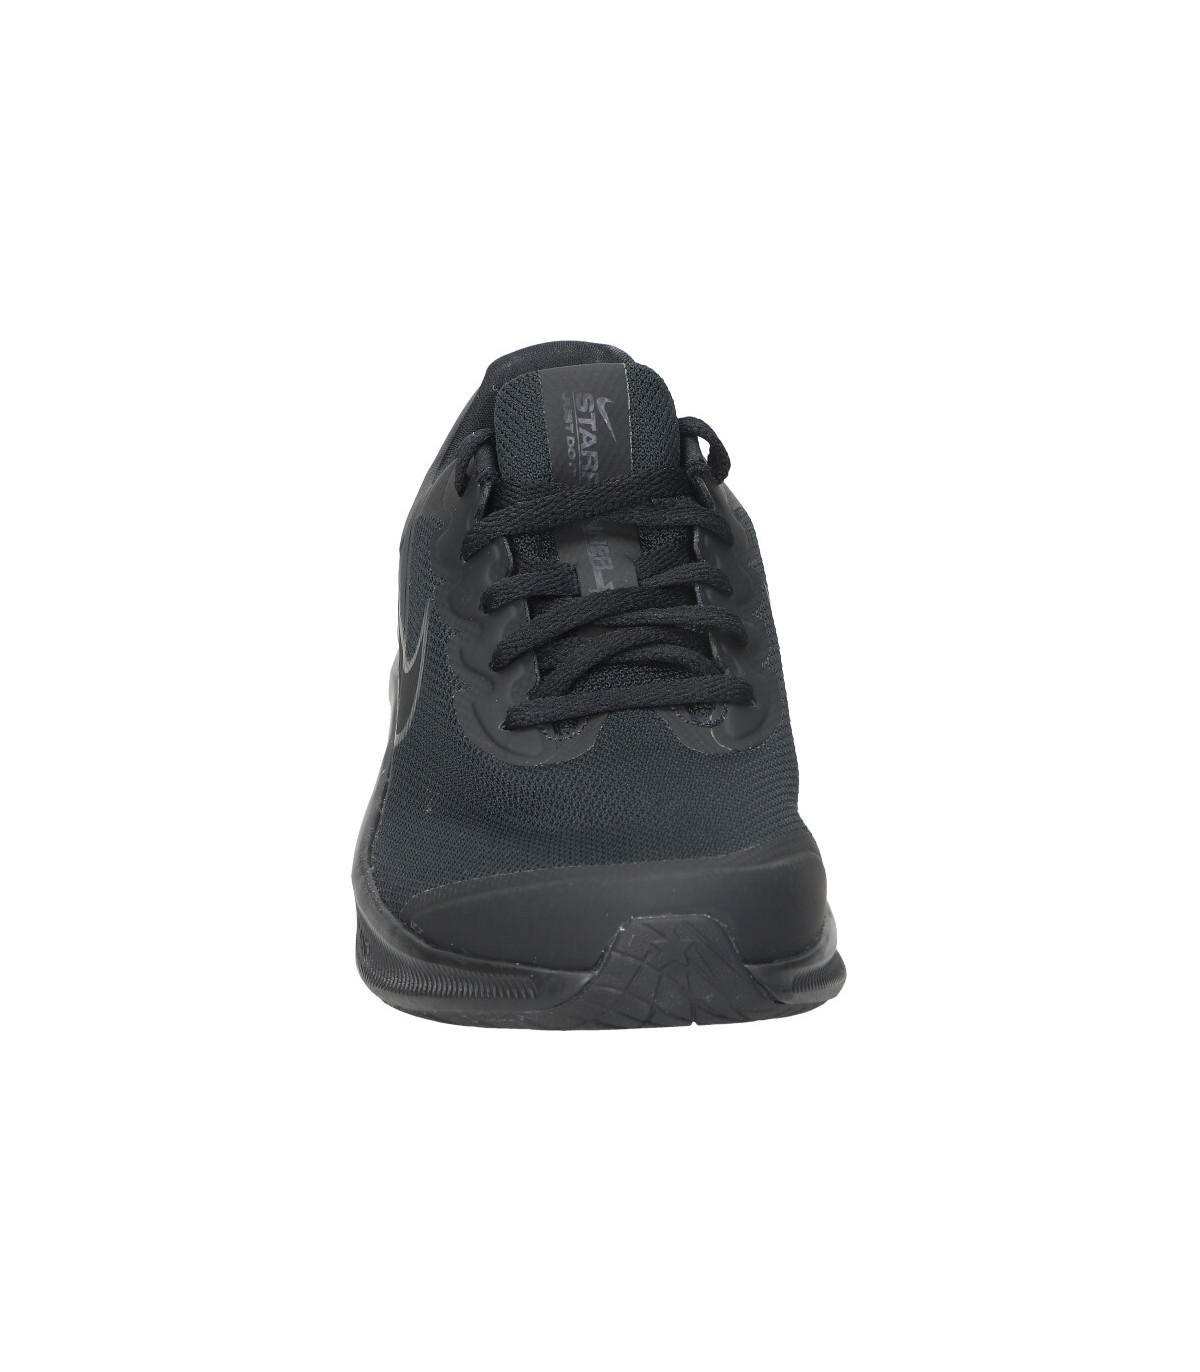 Zapatillas negras para mujer Nike Star Runner 3 online MEGACALZADO